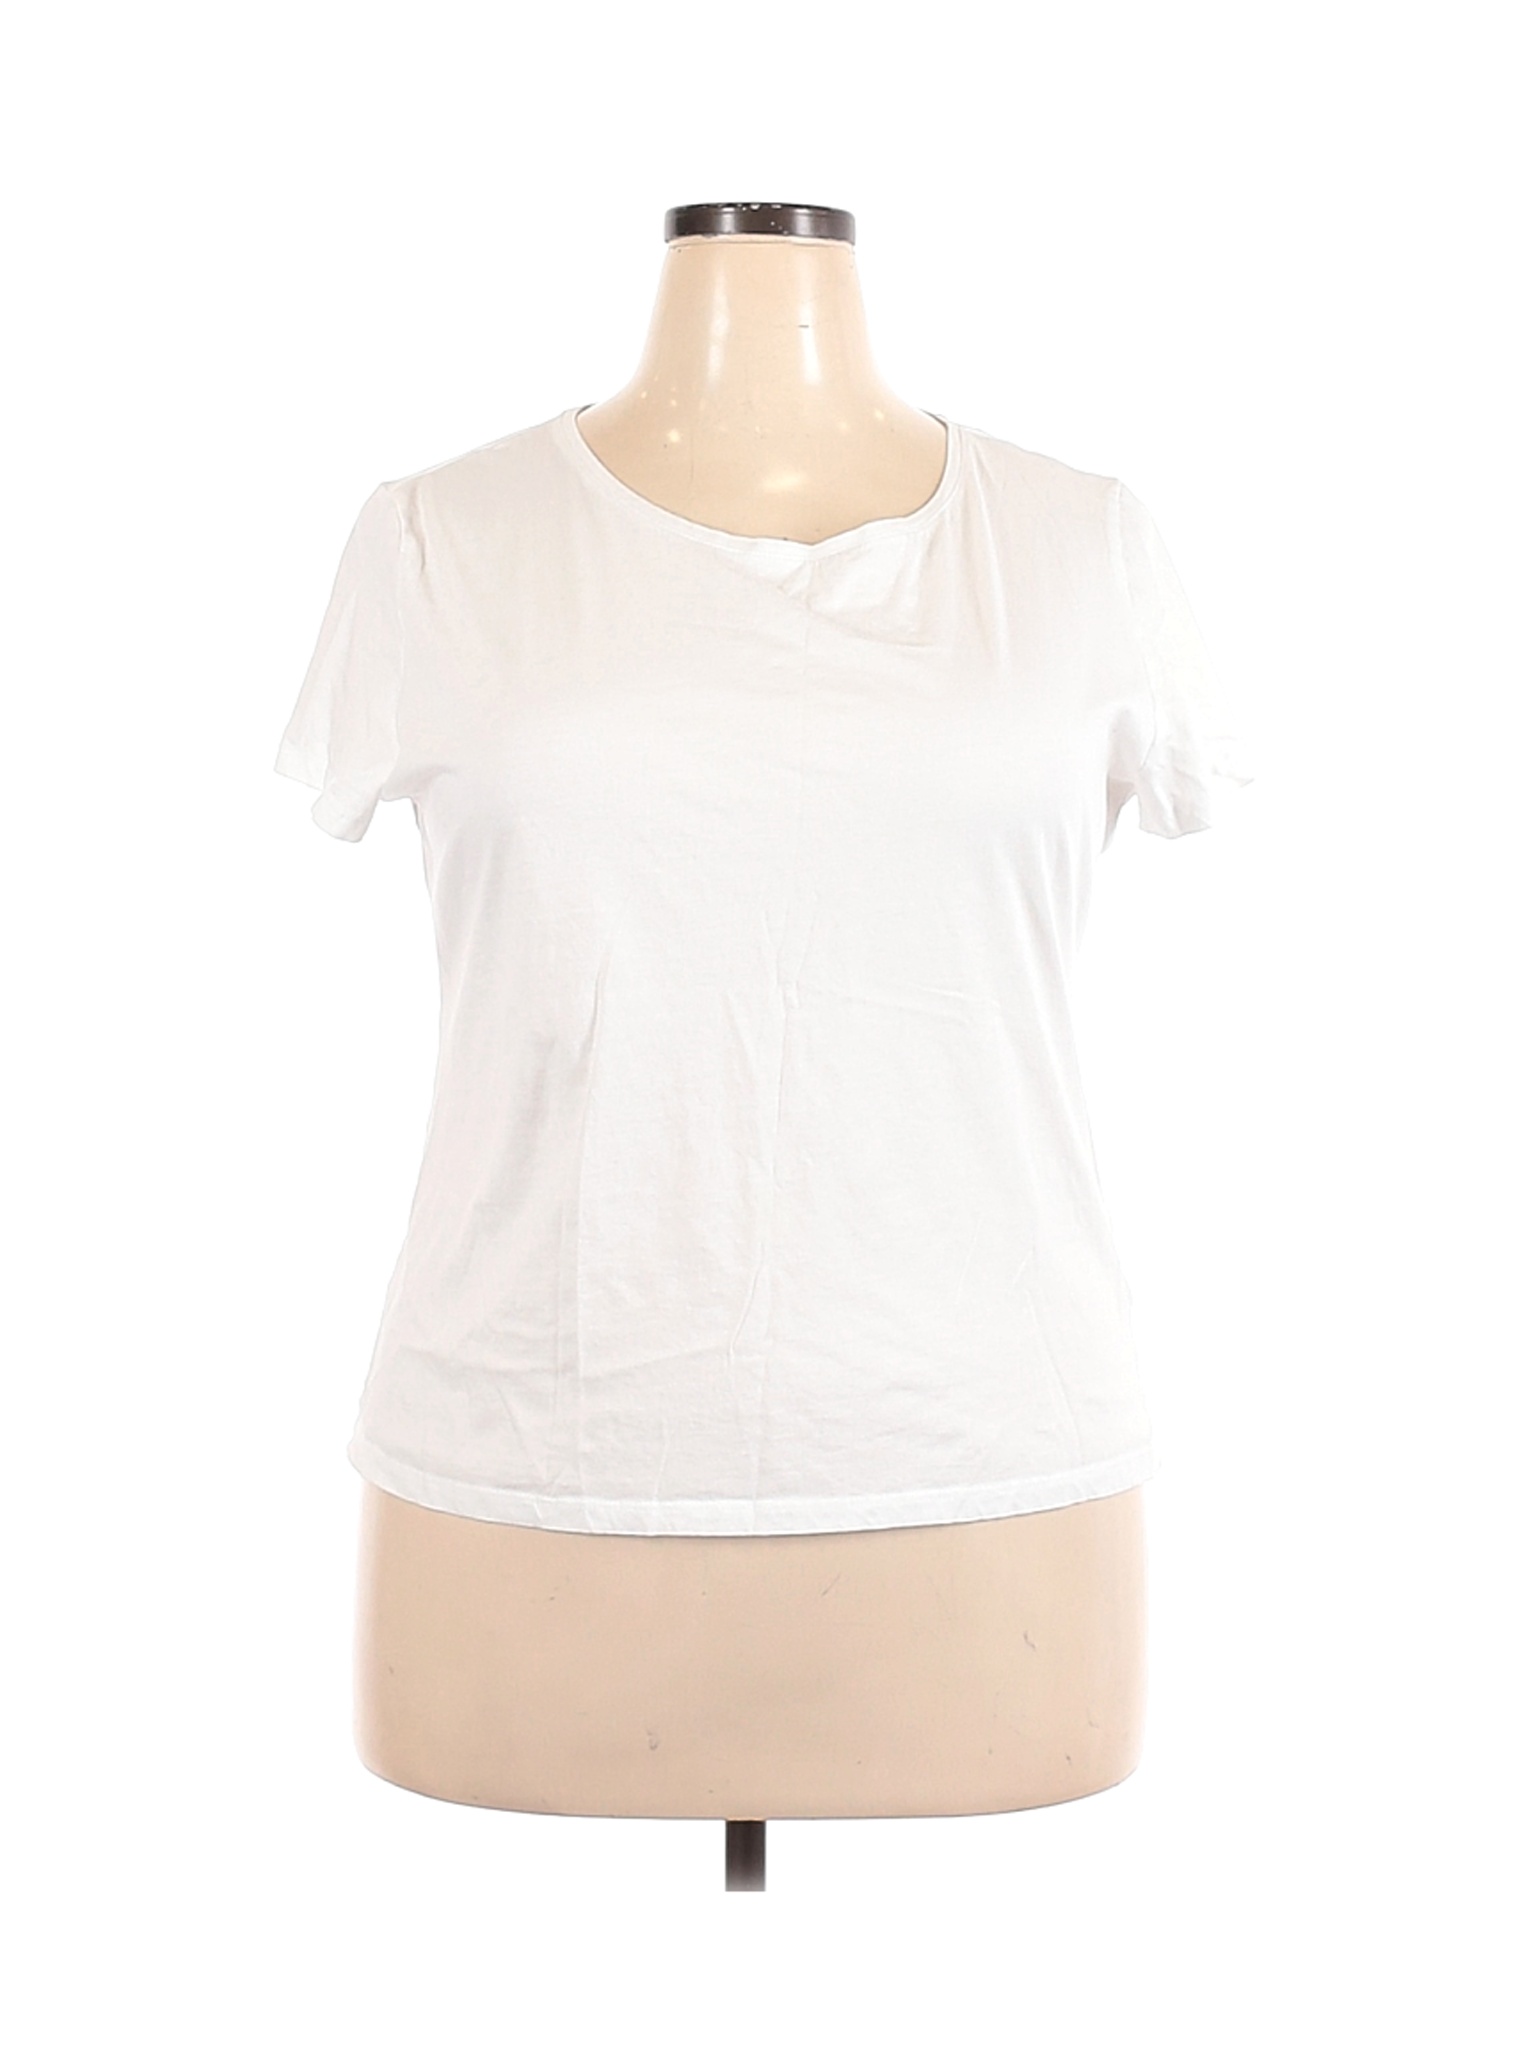 H&M Women White Short Sleeve T-Shirt XXL | eBay